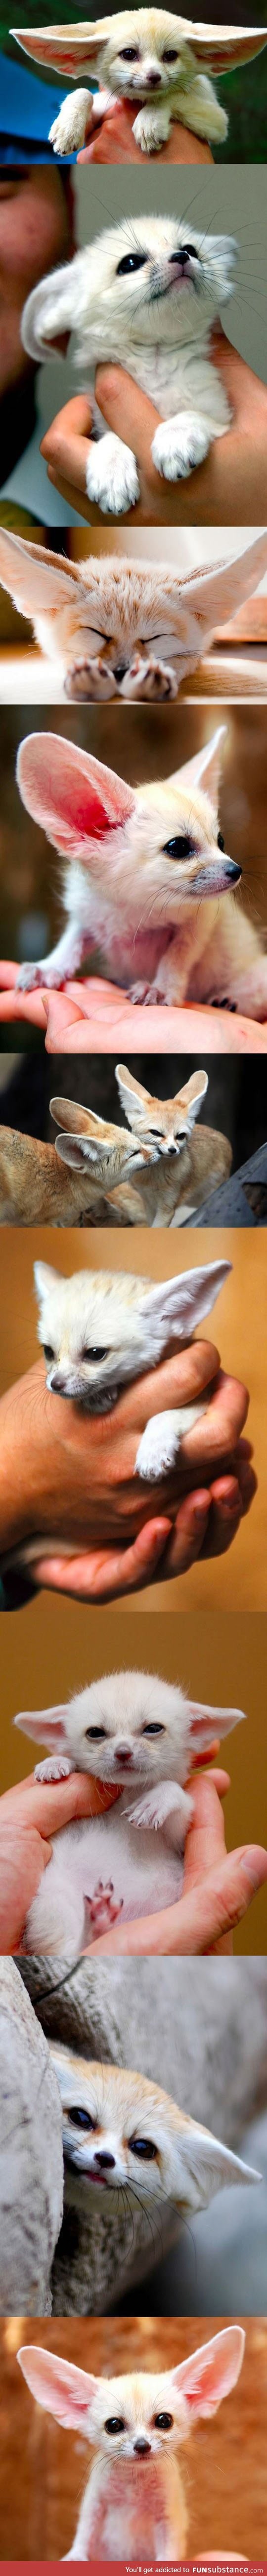 I need a fennec fox in my life